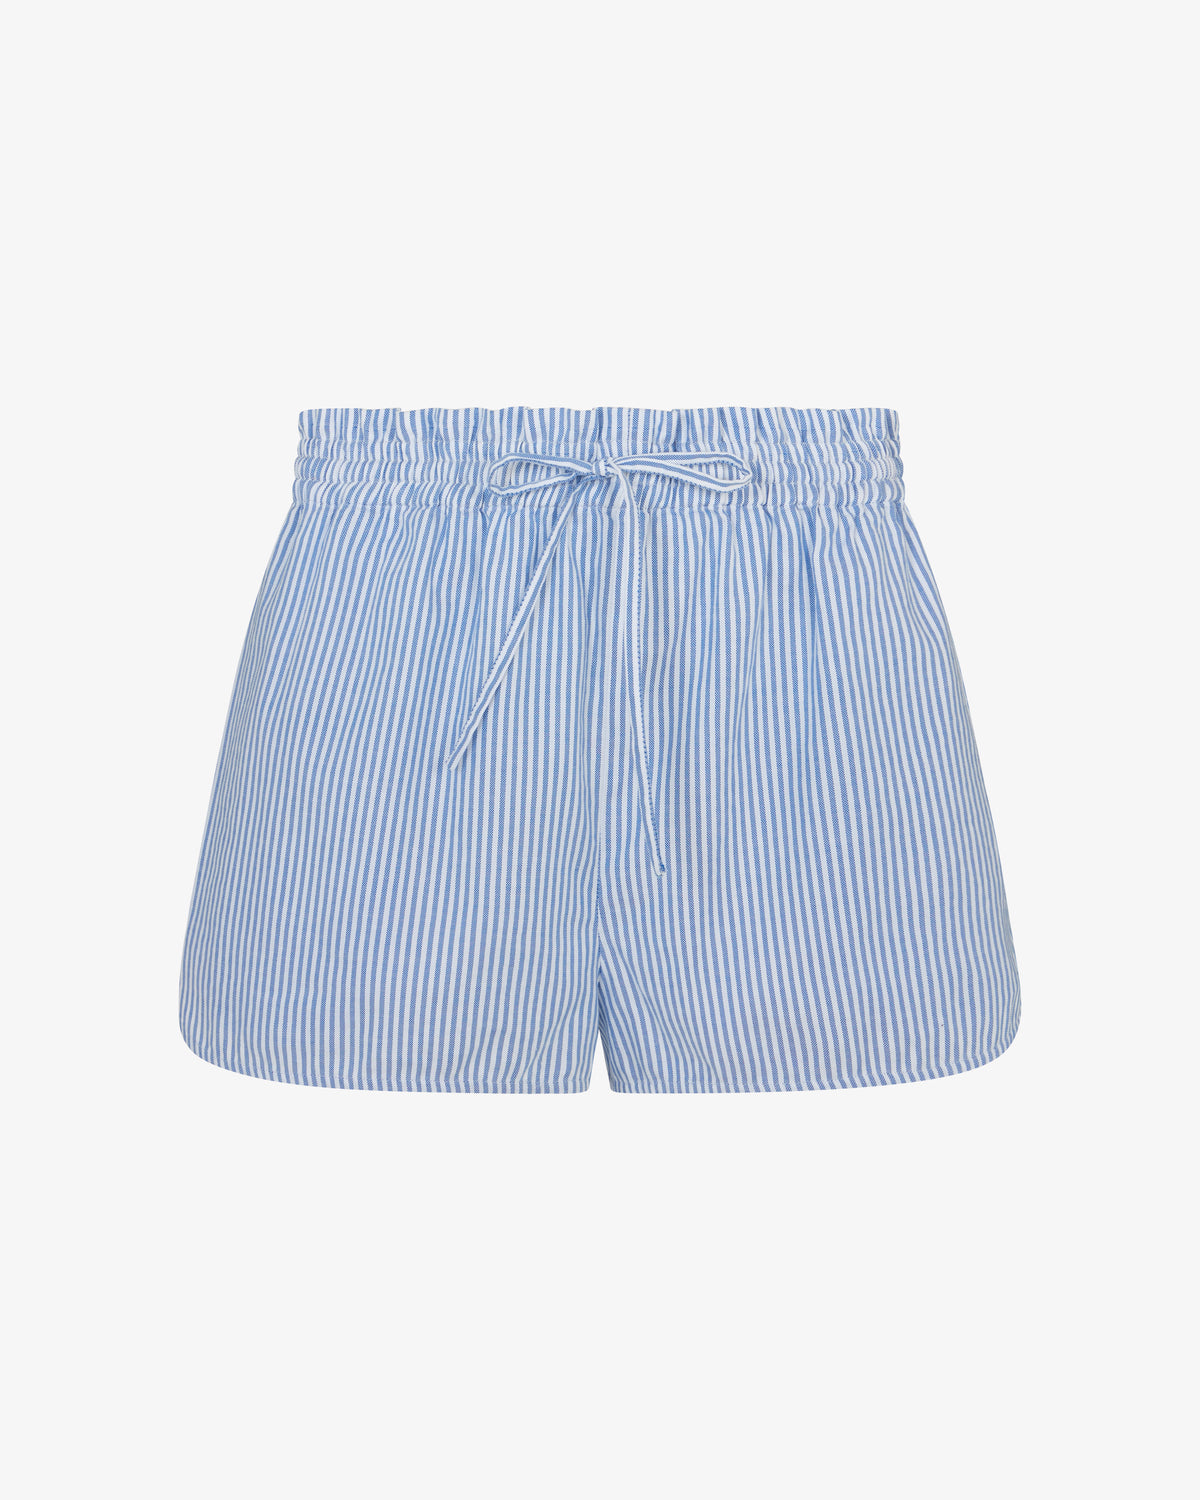 Striped Summer Shorts - Blue/White